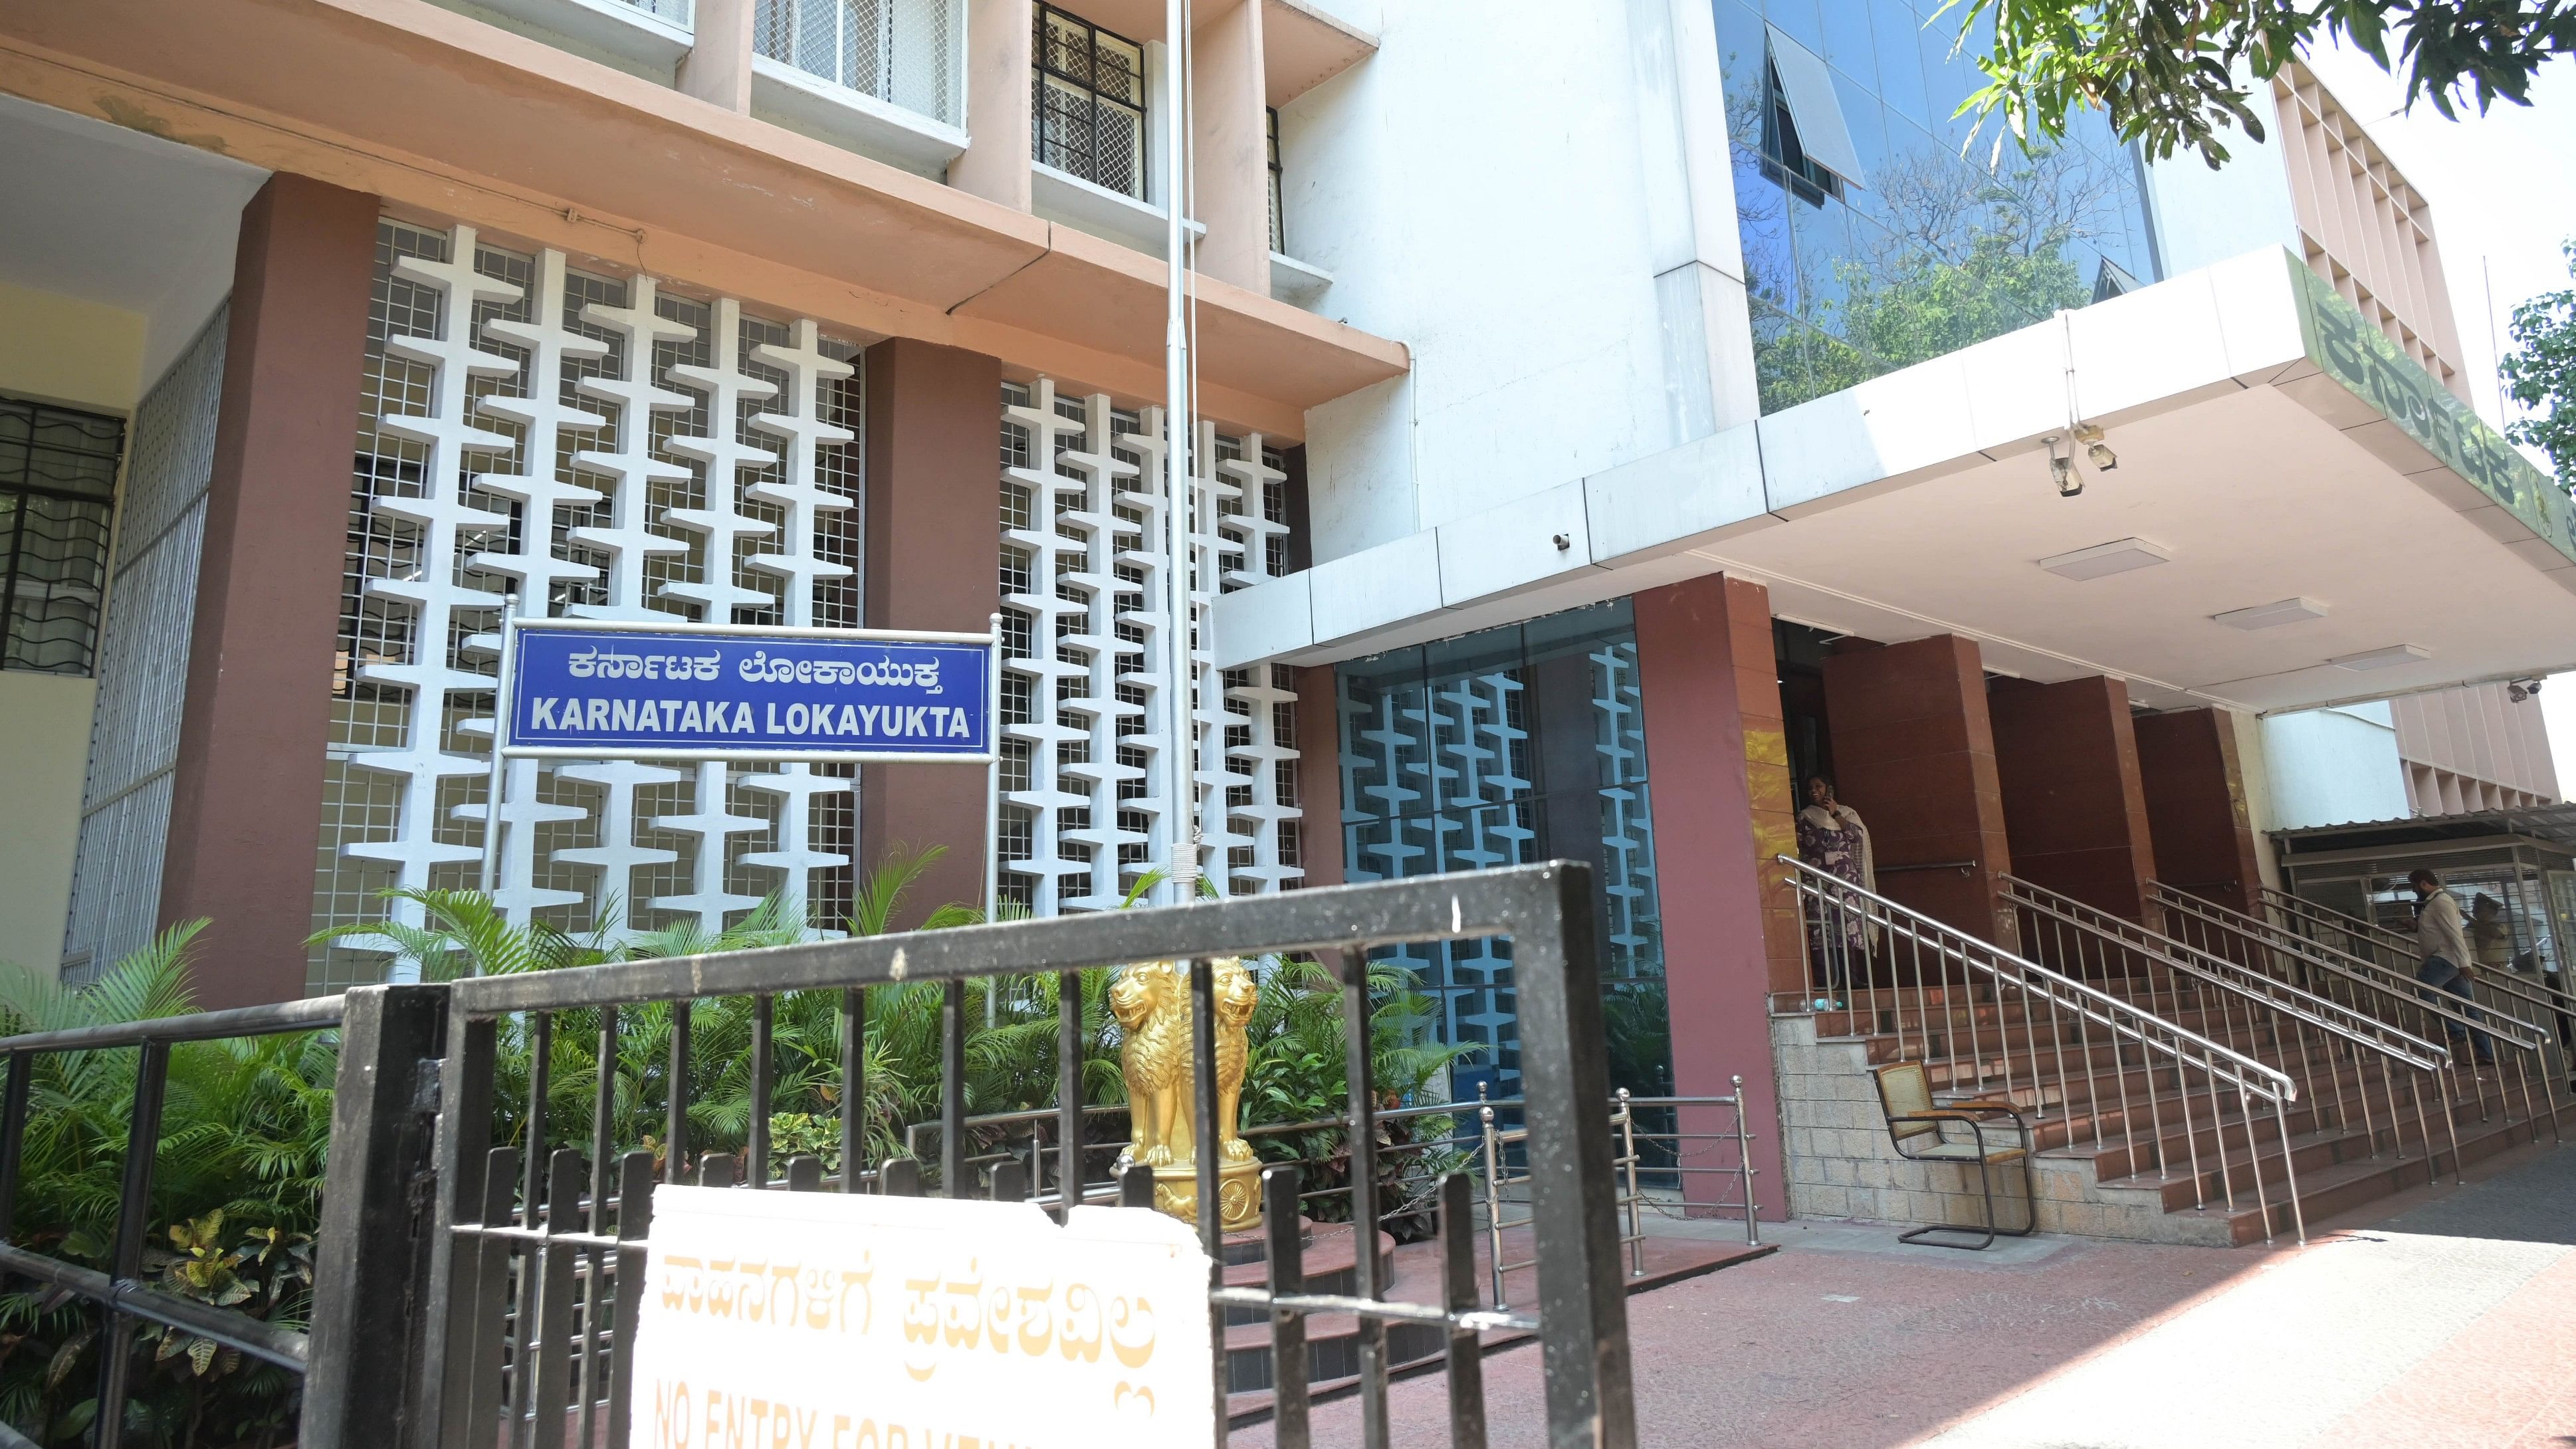 <div class="paragraphs"><p>The Karnataka Lokayukta building in Bengaluru is located on B R Ambedkar&nbsp;Road. </p></div>